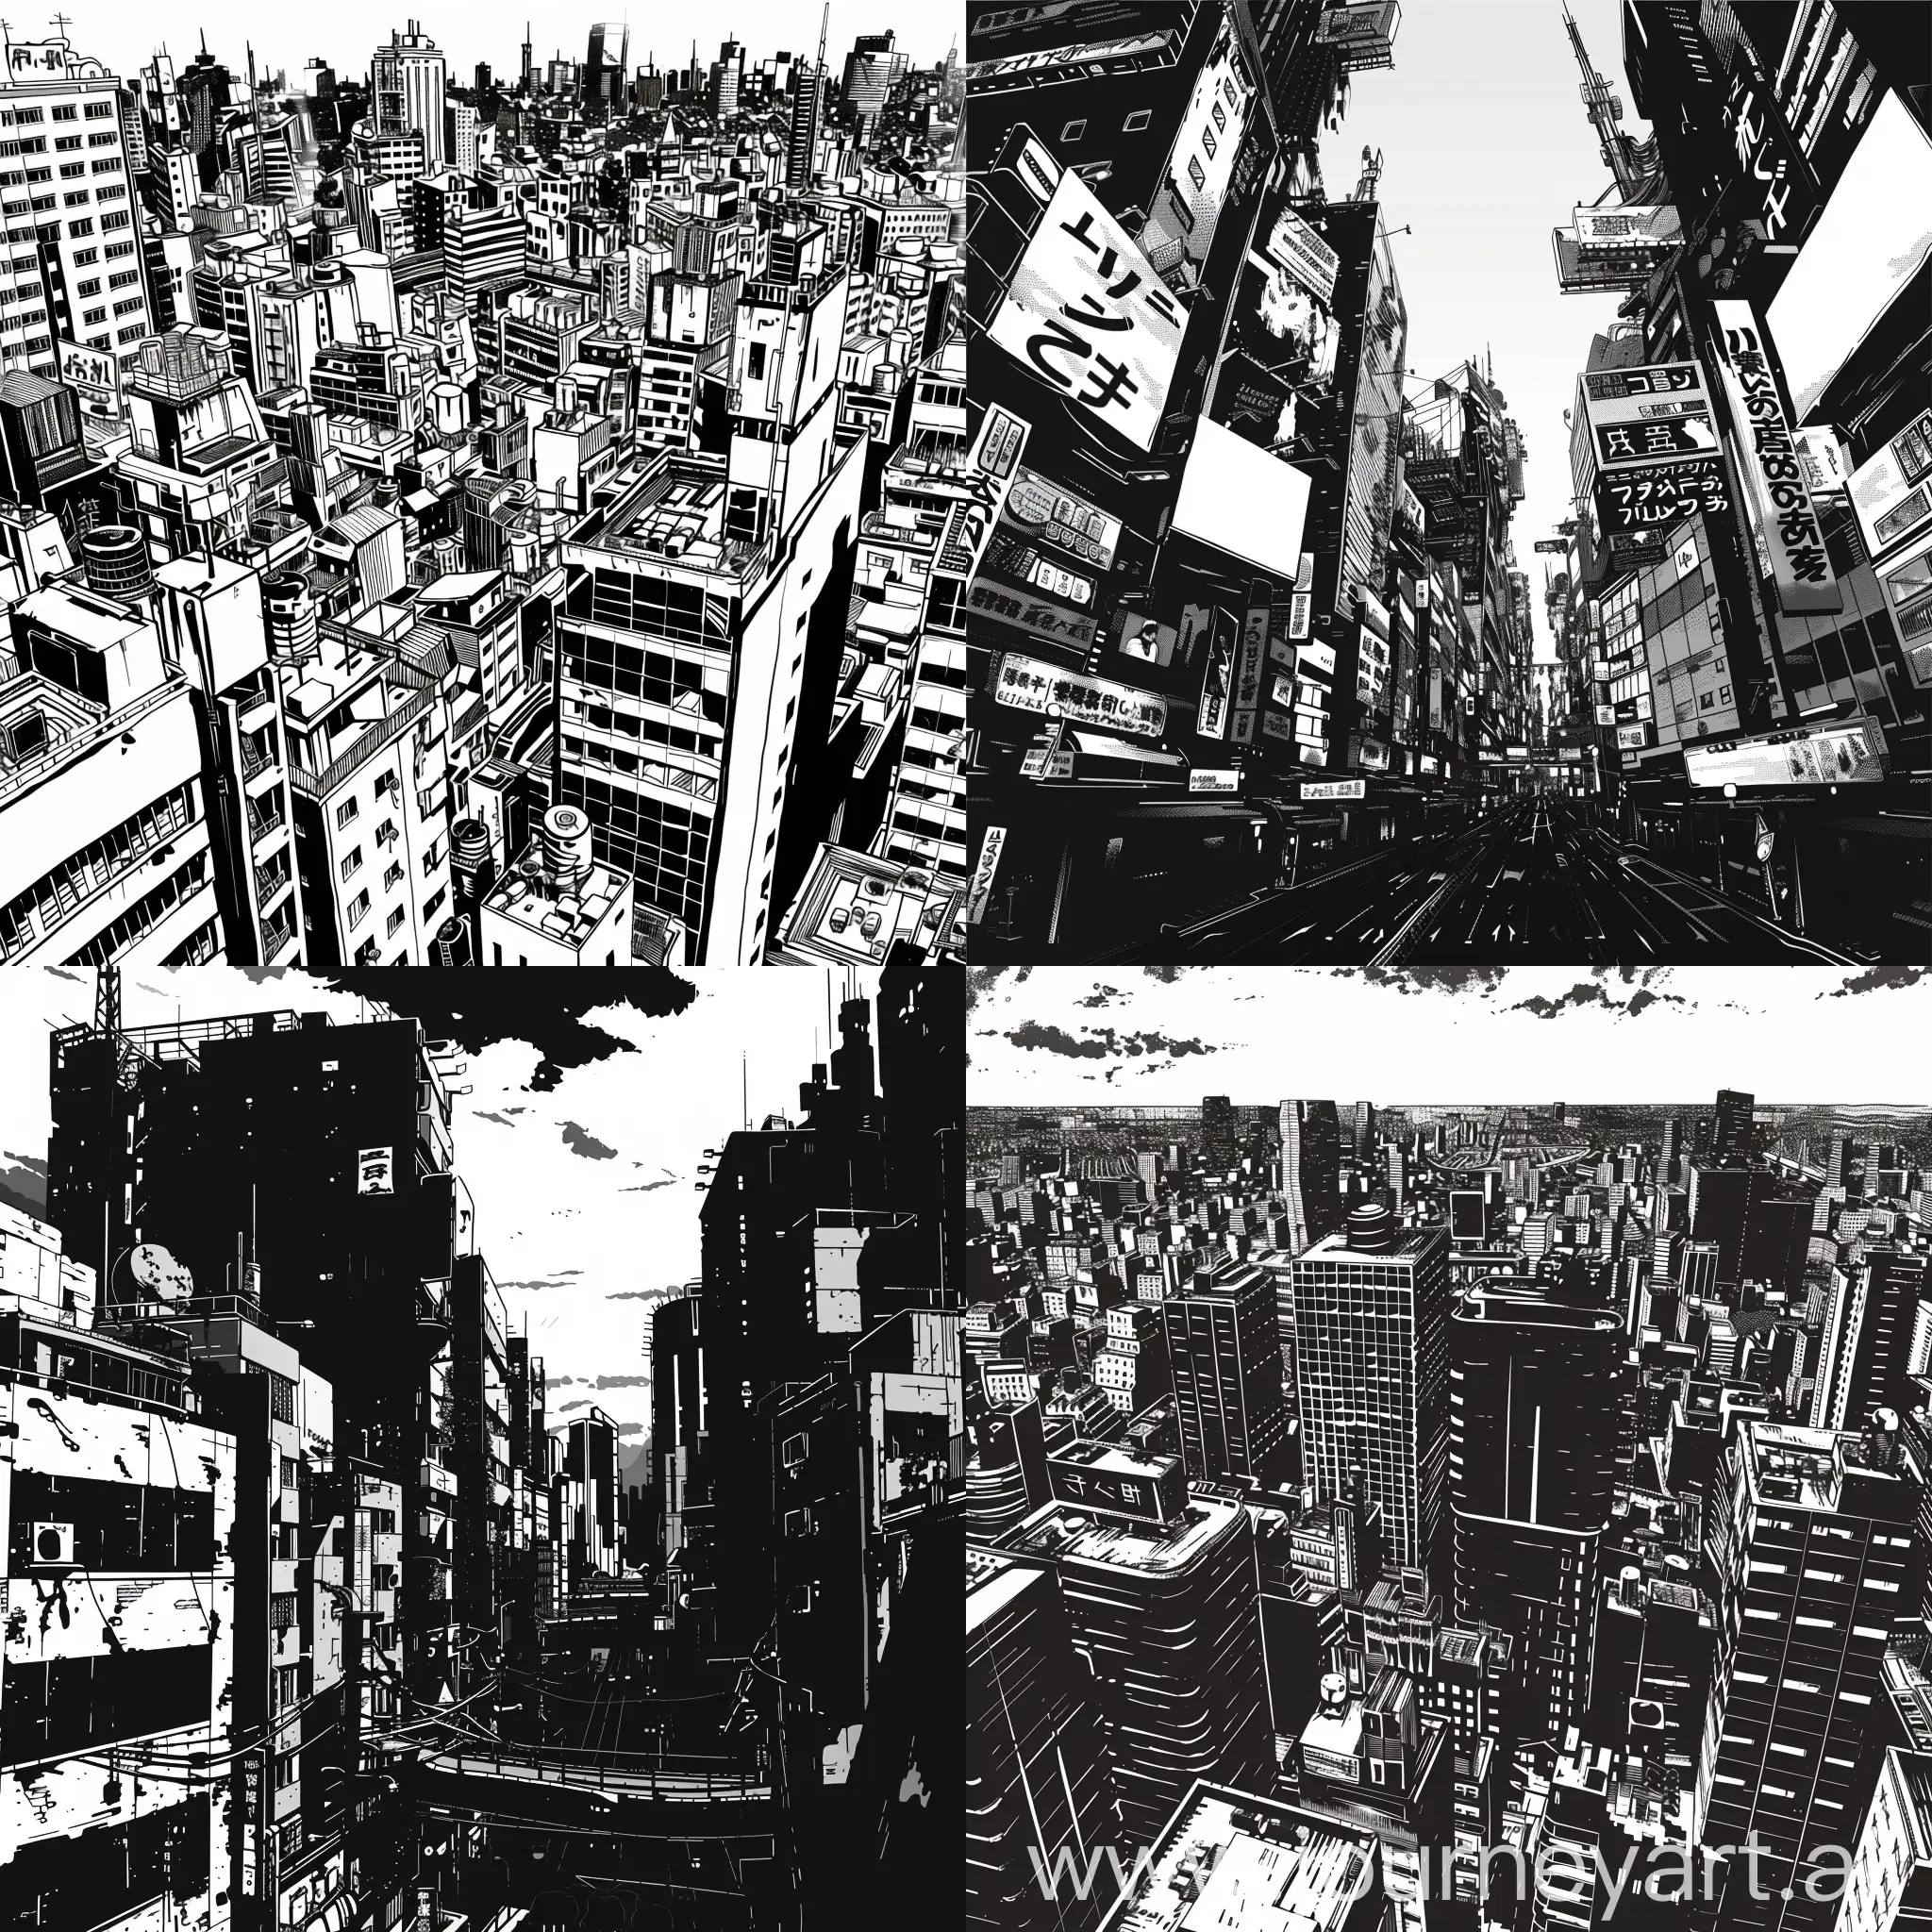 Monochrome-Manga-Cityscape-with-Skyscrapers